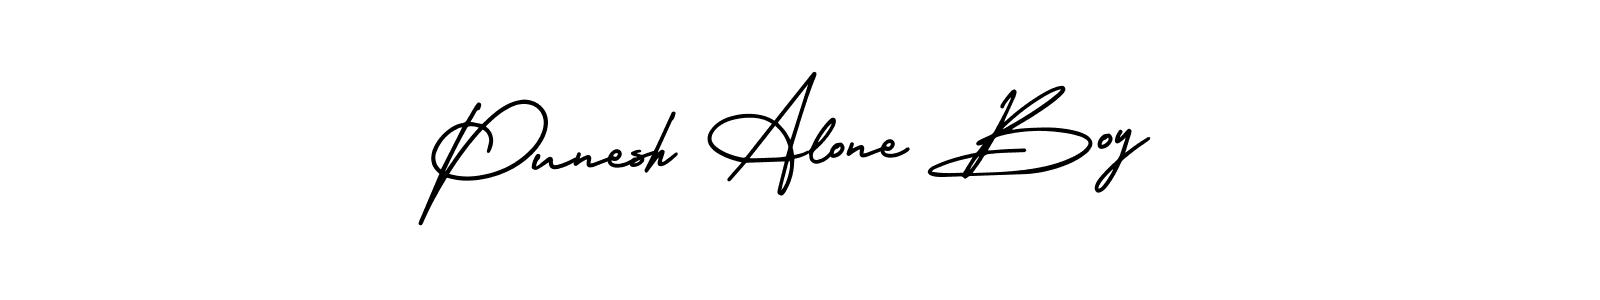 How to Draw Punesh Alone Boy signature style? AmerikaSignatureDemo-Regular is a latest design signature styles for name Punesh Alone Boy. Punesh Alone Boy signature style 3 images and pictures png